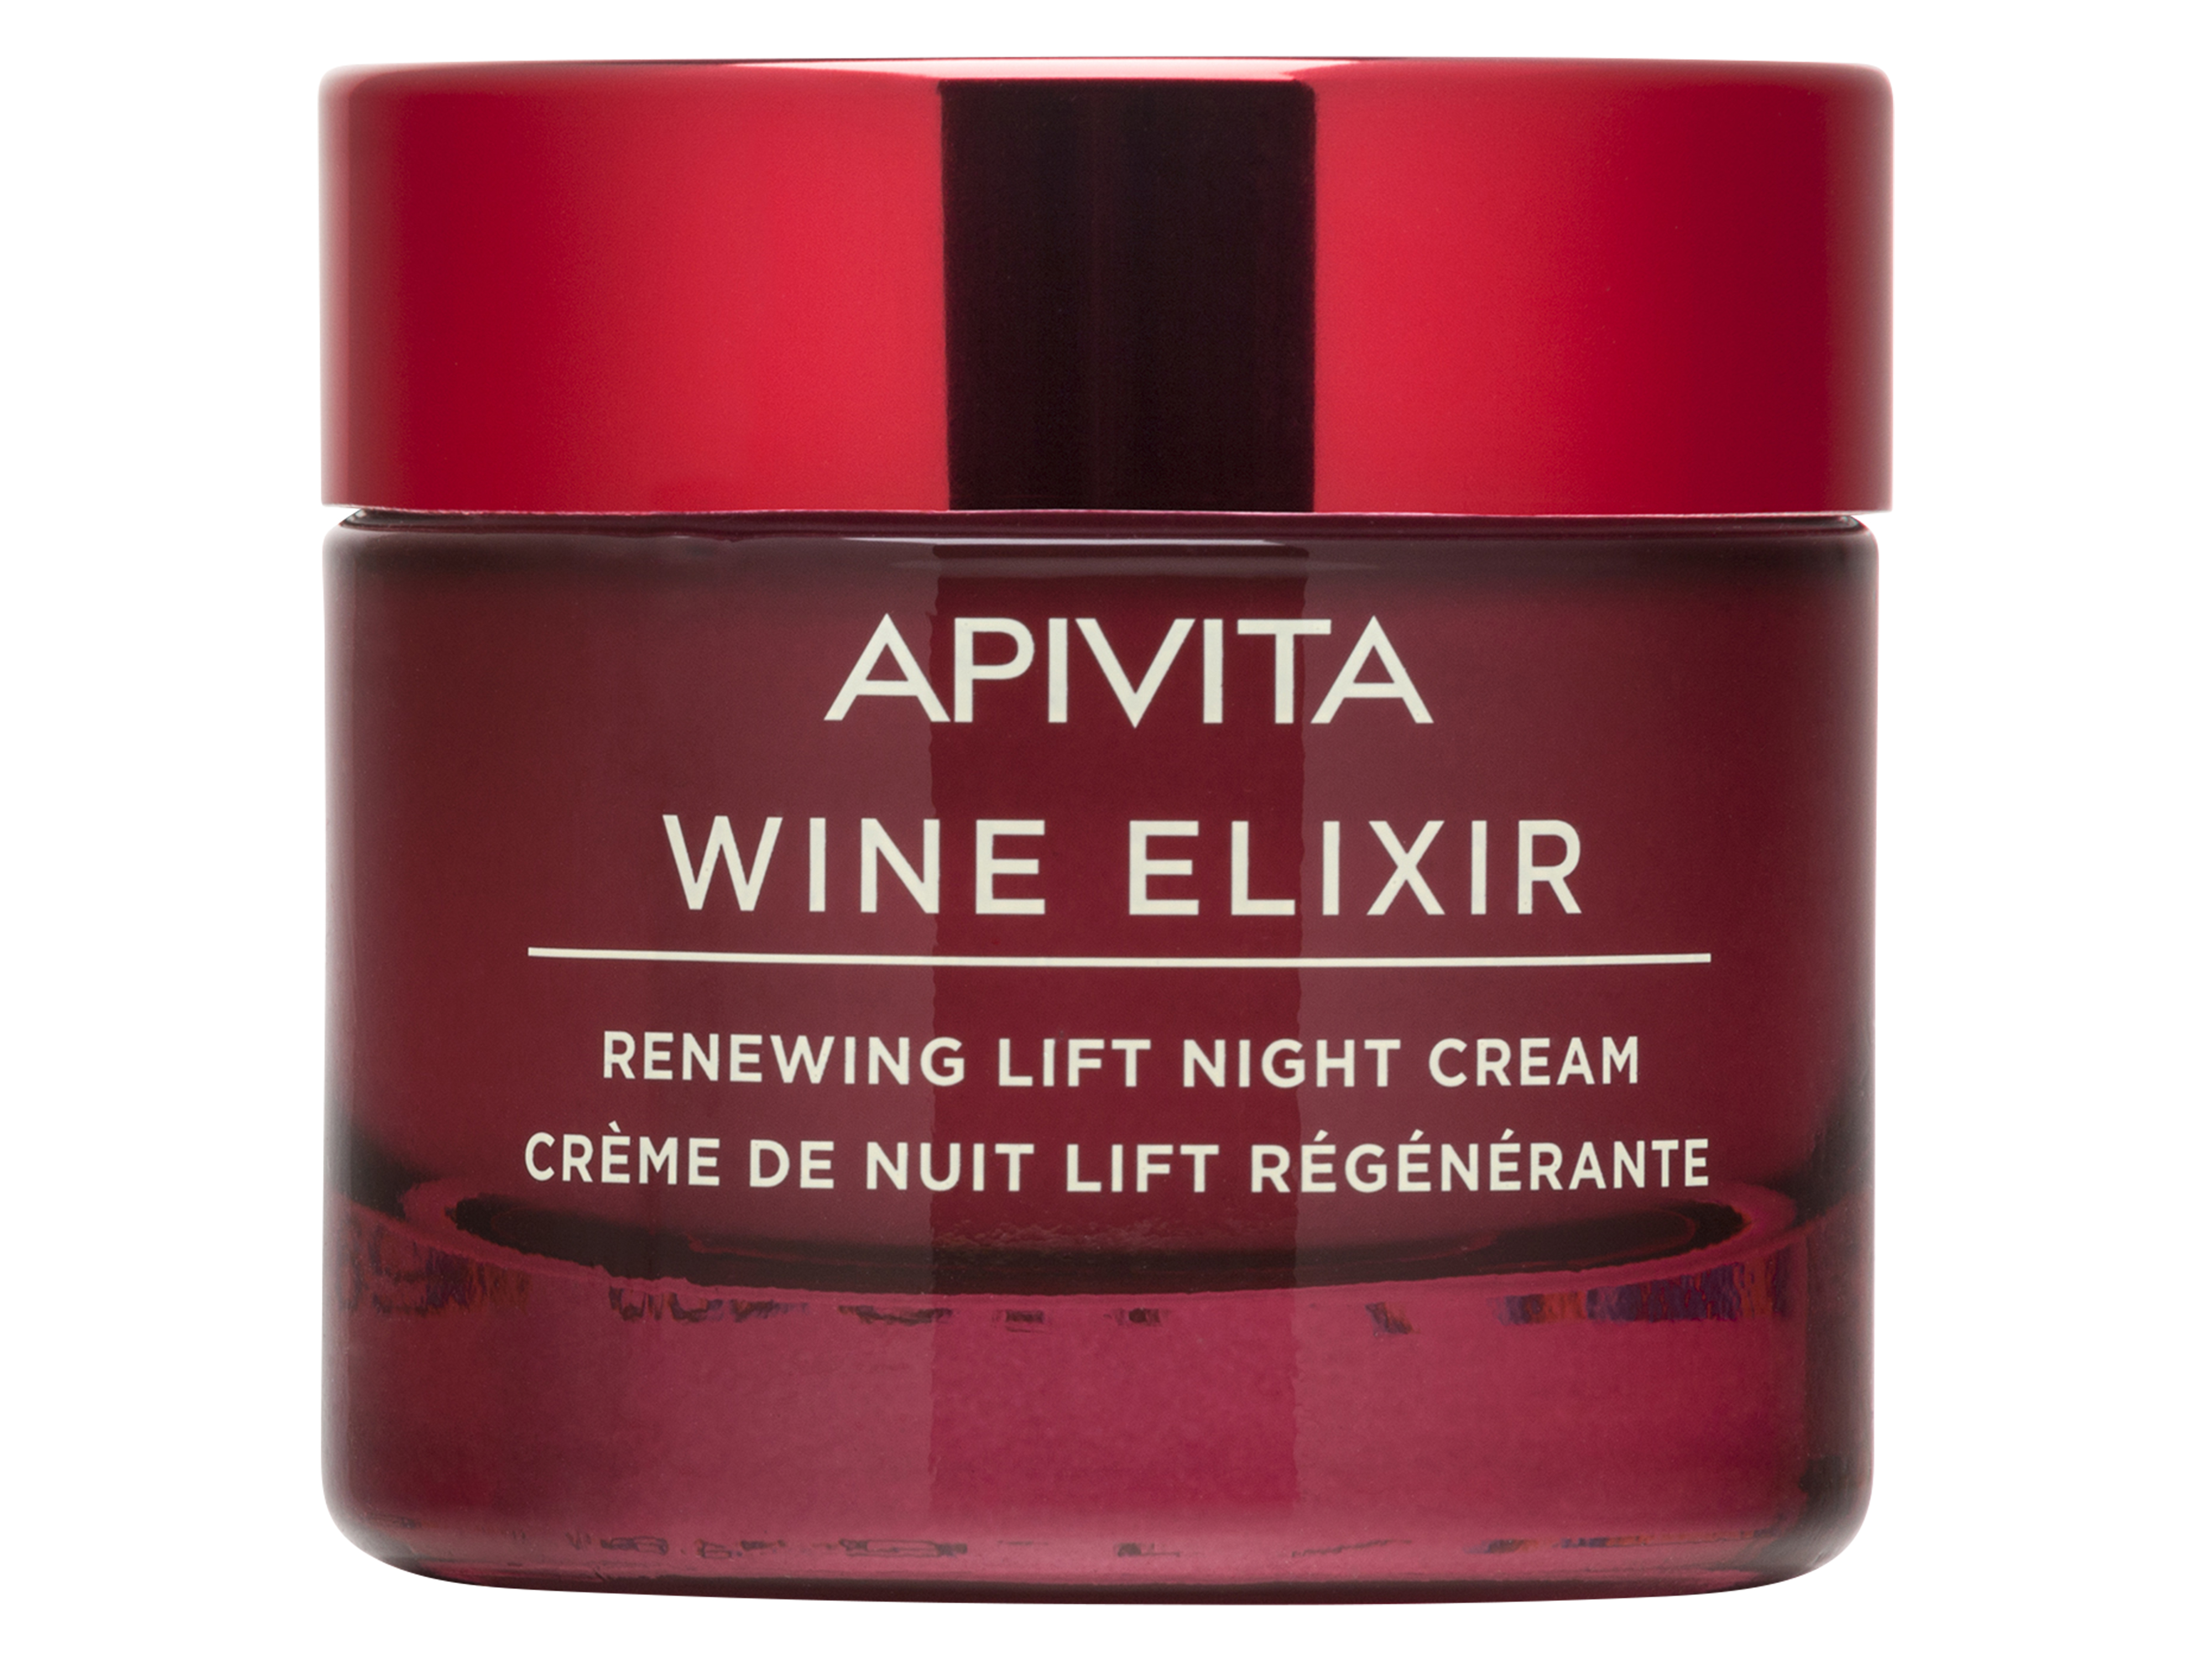 Apivita Wine Elixir Renewing Lift Night Cream, 50 ml